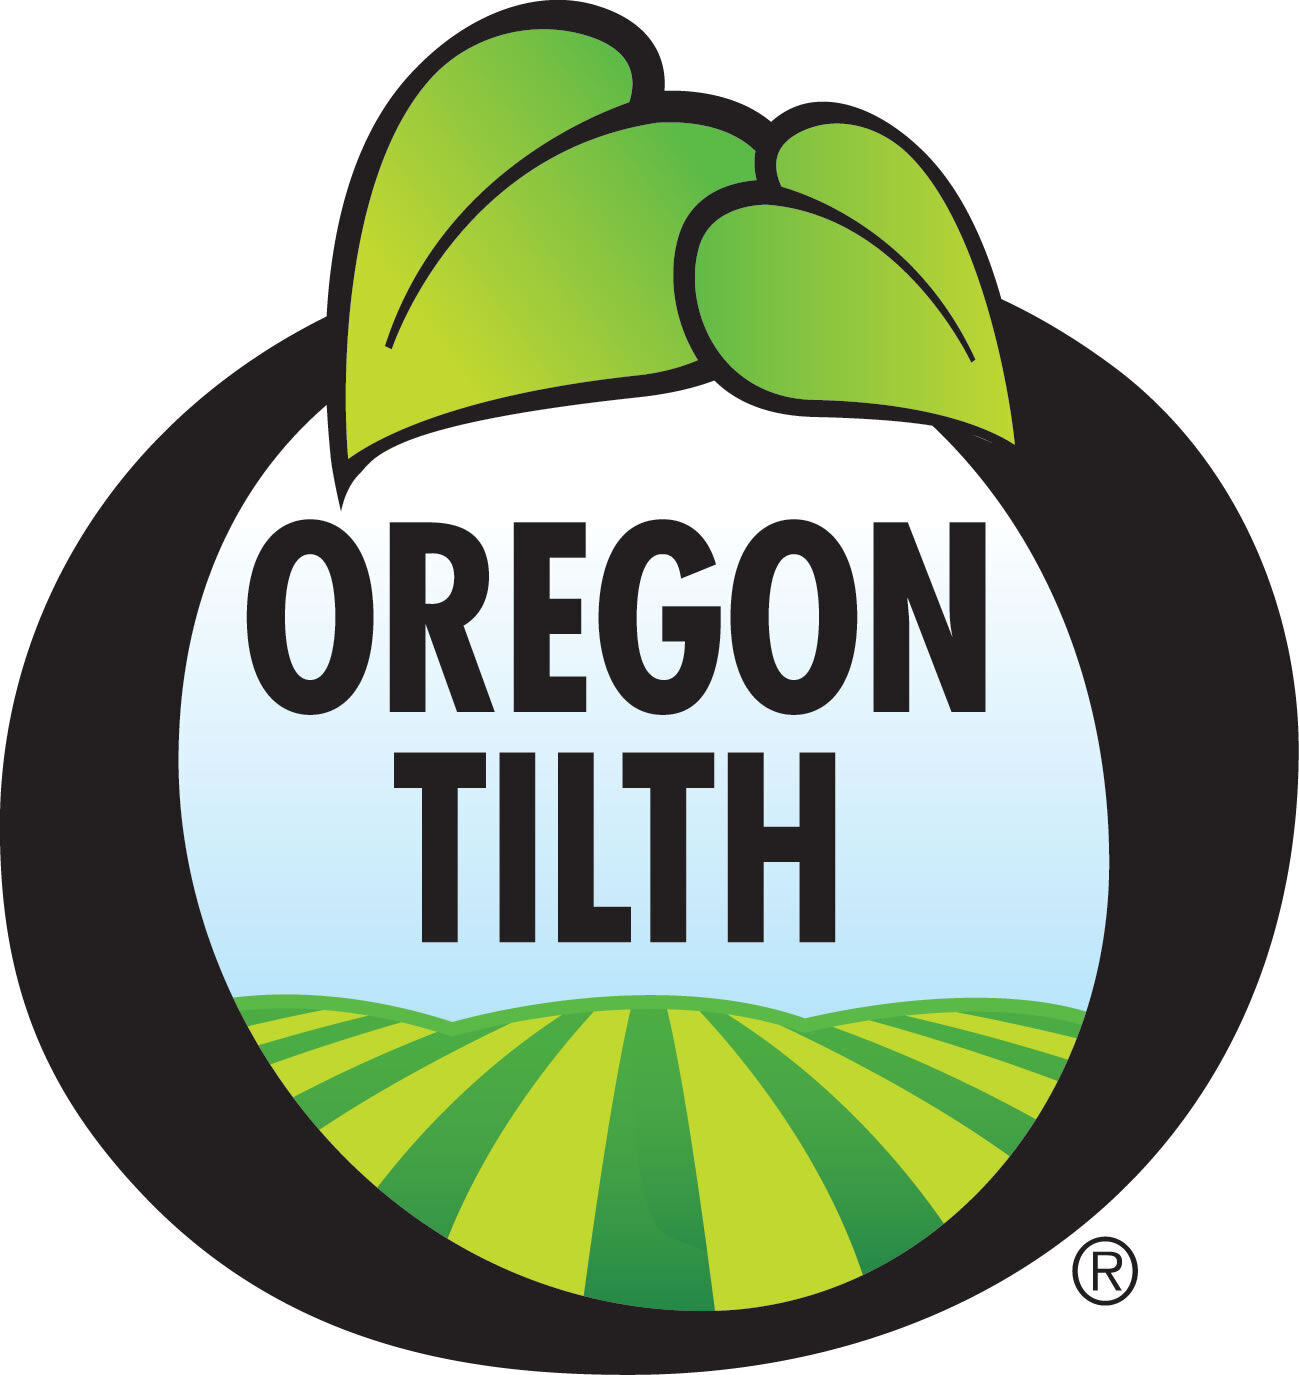 Oregon Tilth logo